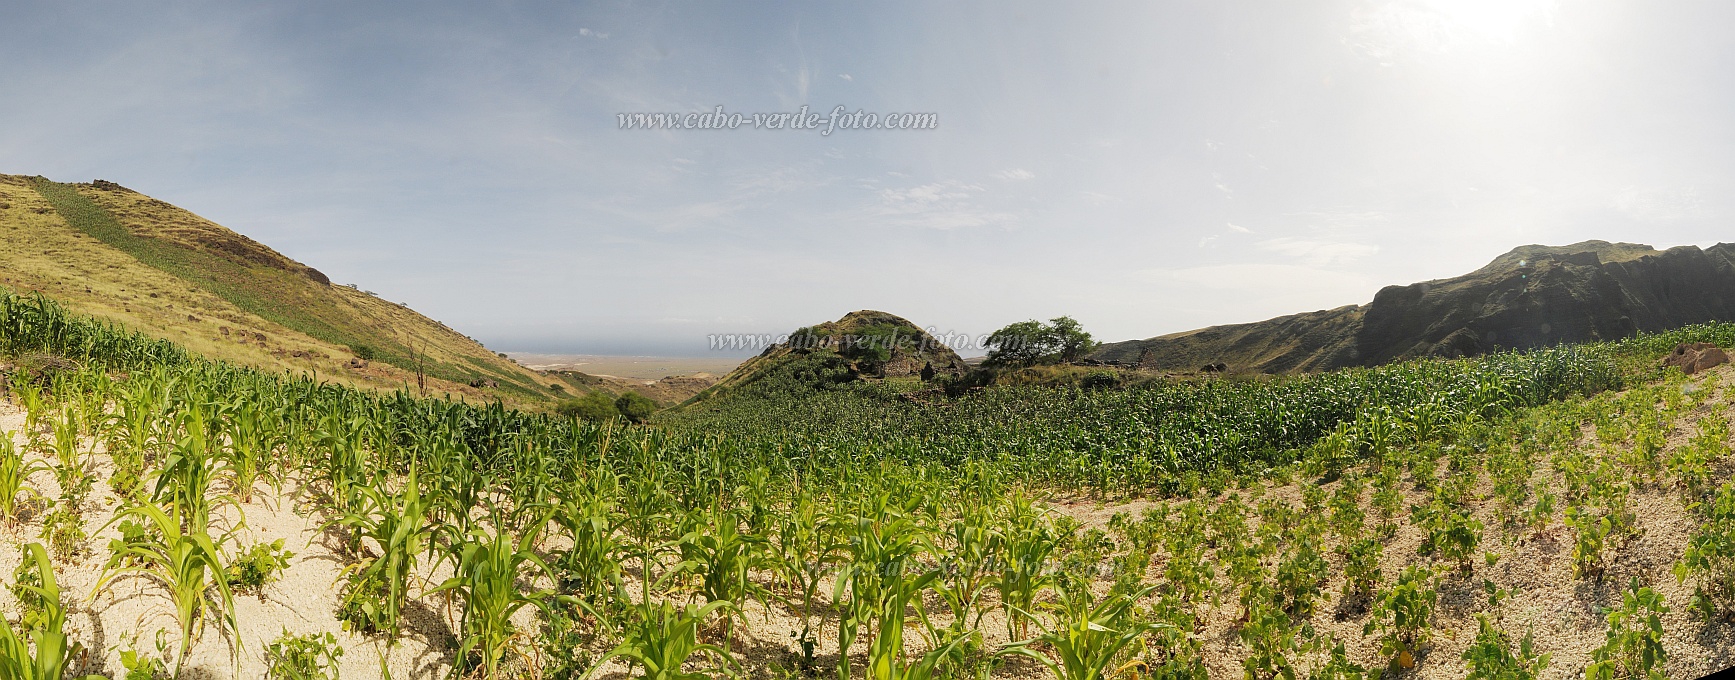 Santo Anto : Tabuleirinho da Tabuga : maize field : Landscape AgricultureCabo Verde Foto Gallery